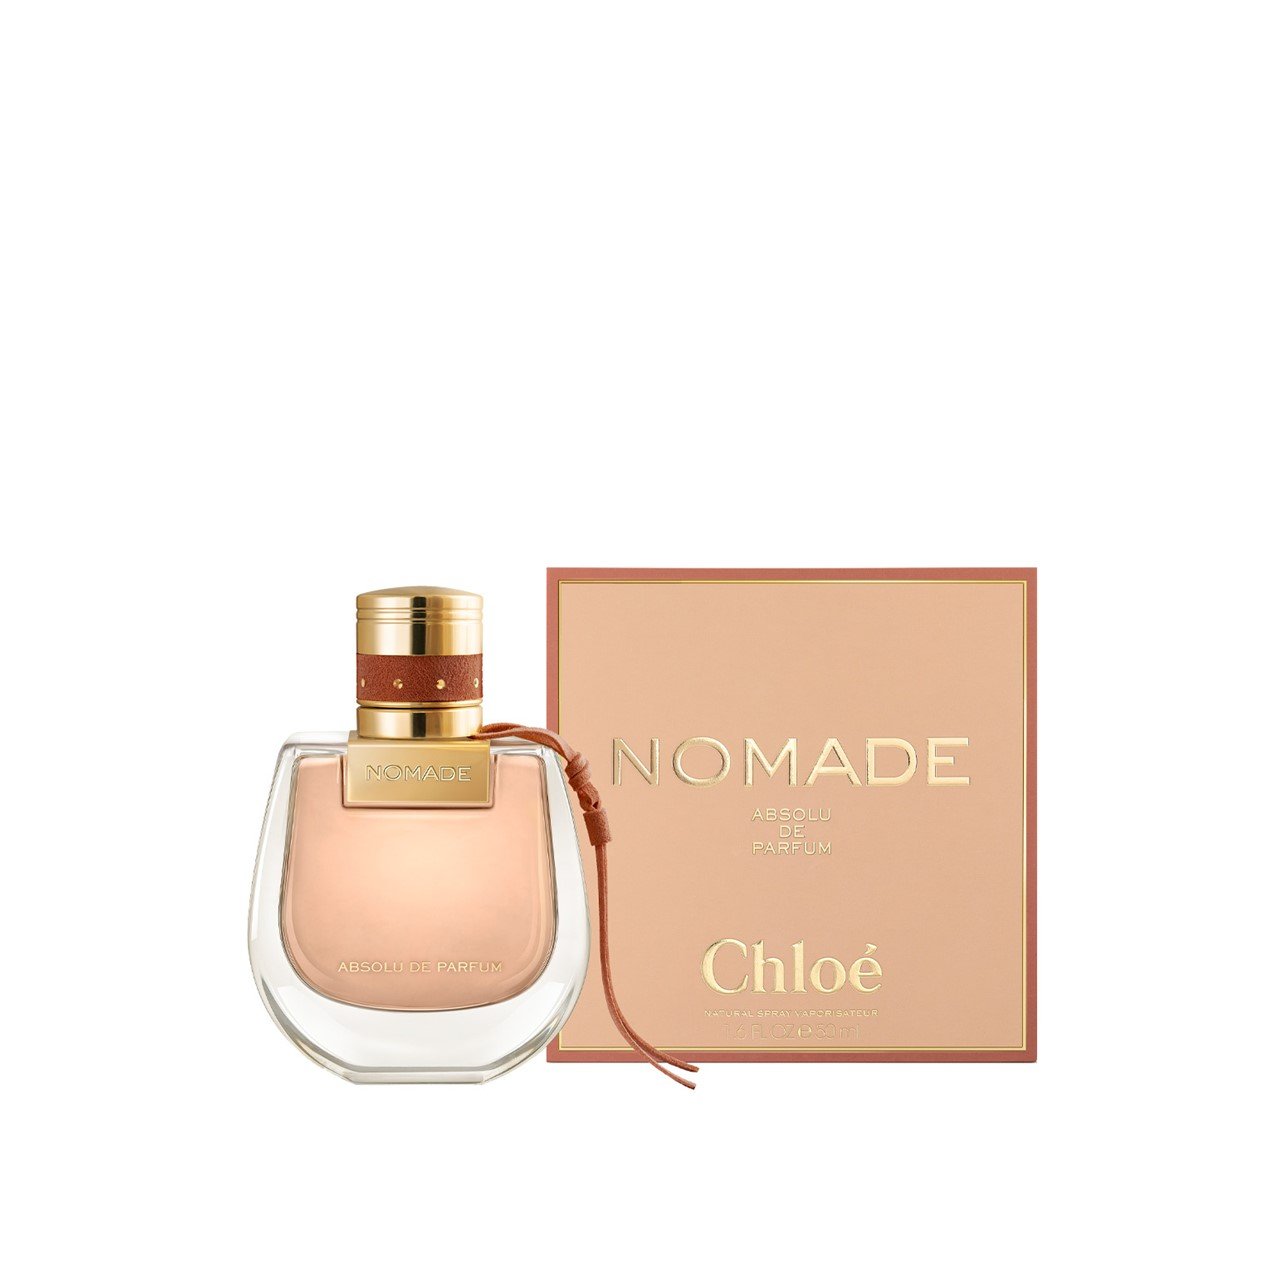 Chloé Nomade Absolu Eau de Parfum 50ml (1.7fl oz)